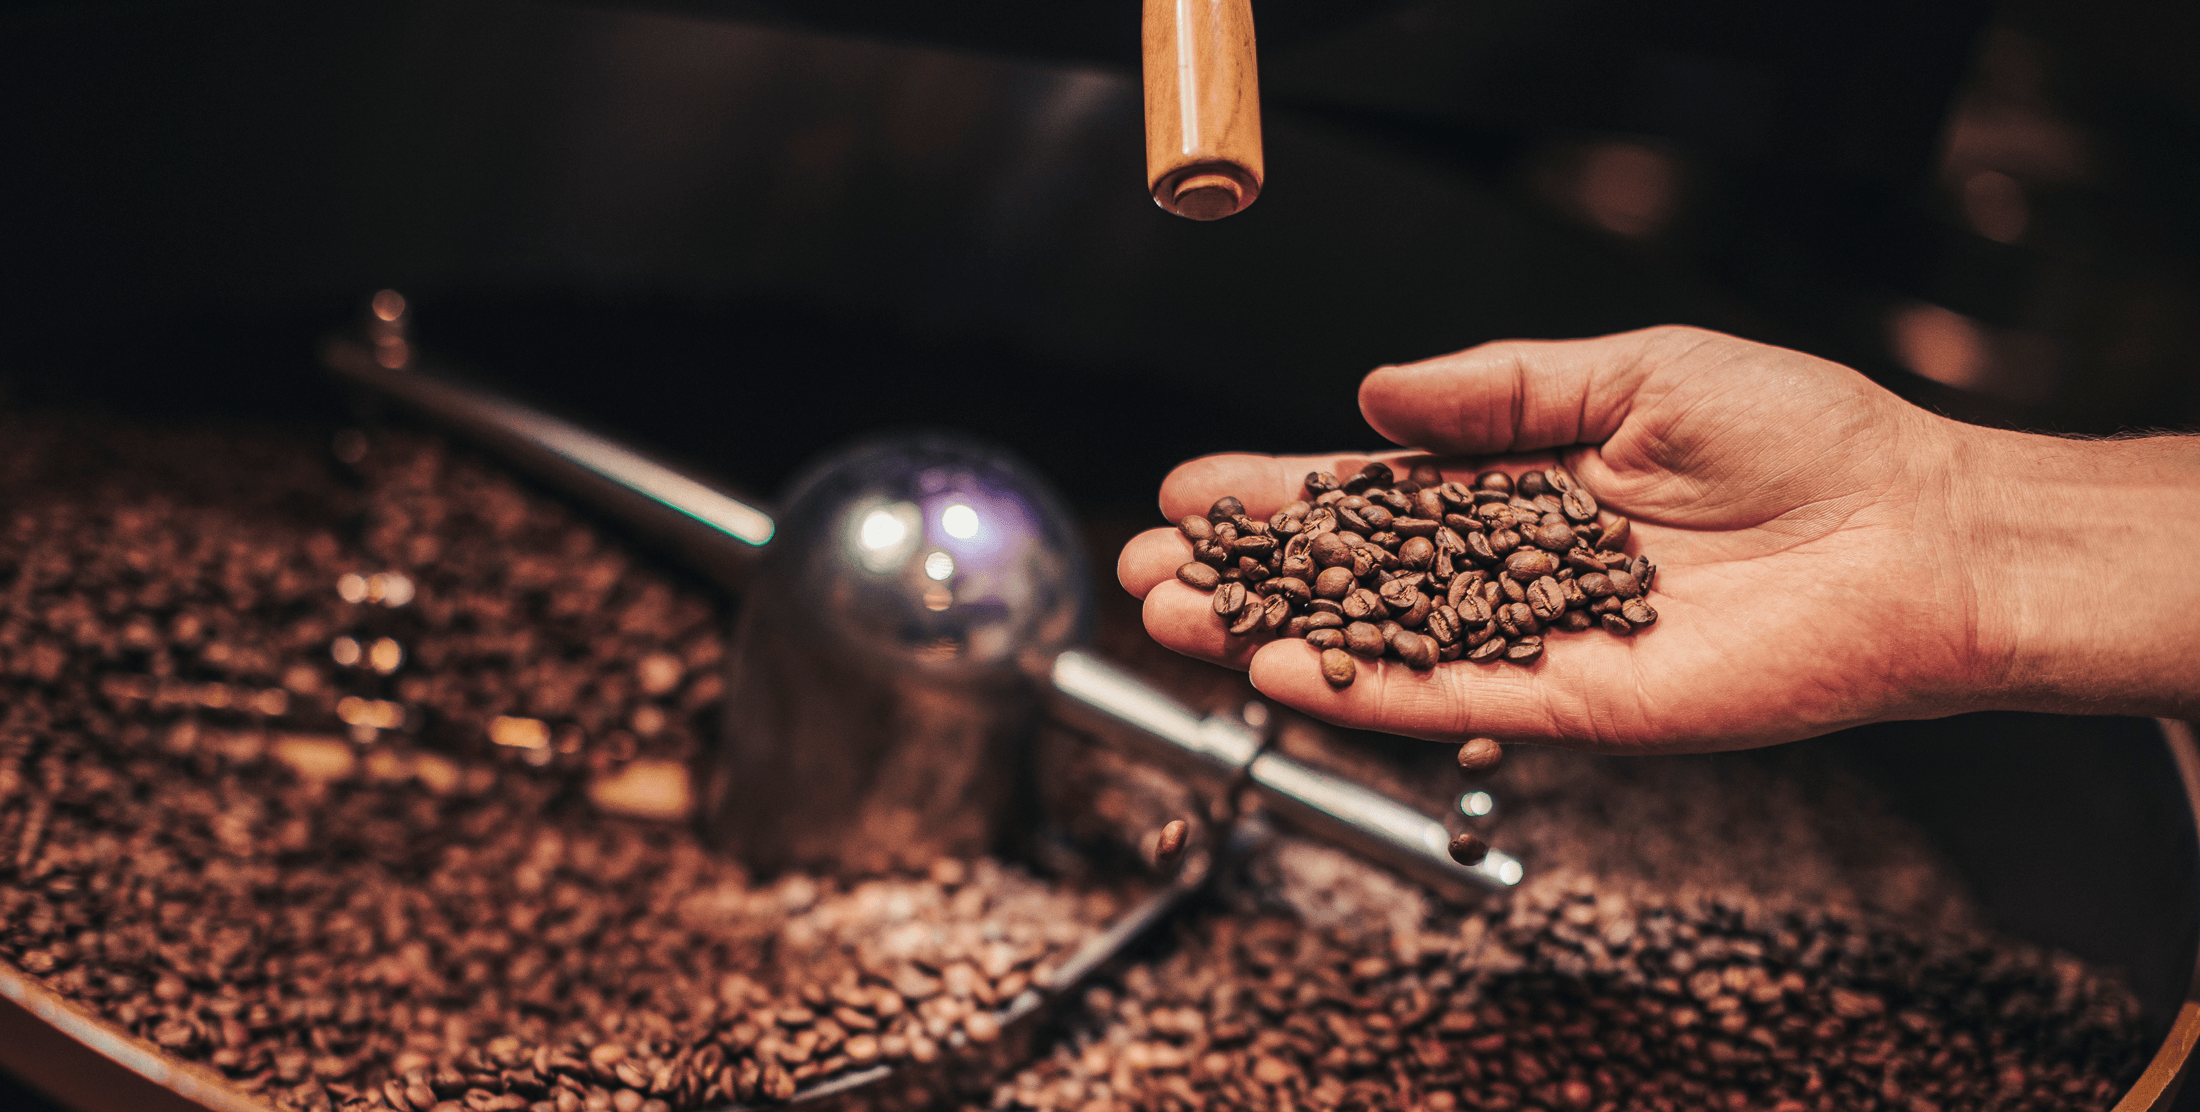 Light, Medium, Dark - Röstgrade beim Kaffee erklärt - carabica - fine coffee culture